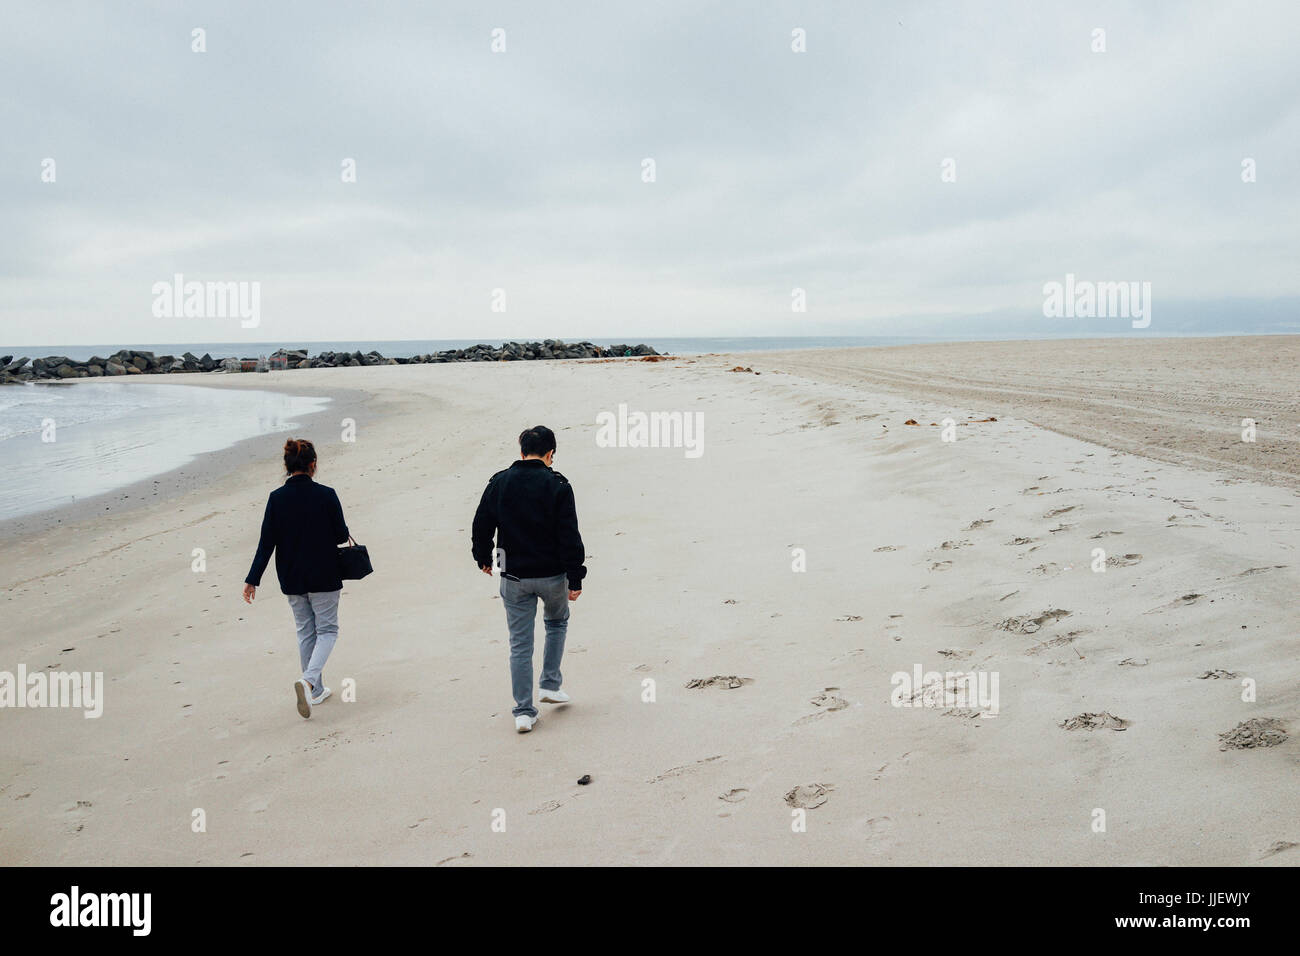 The couple are walking on Venice beach, California. Stock Photo